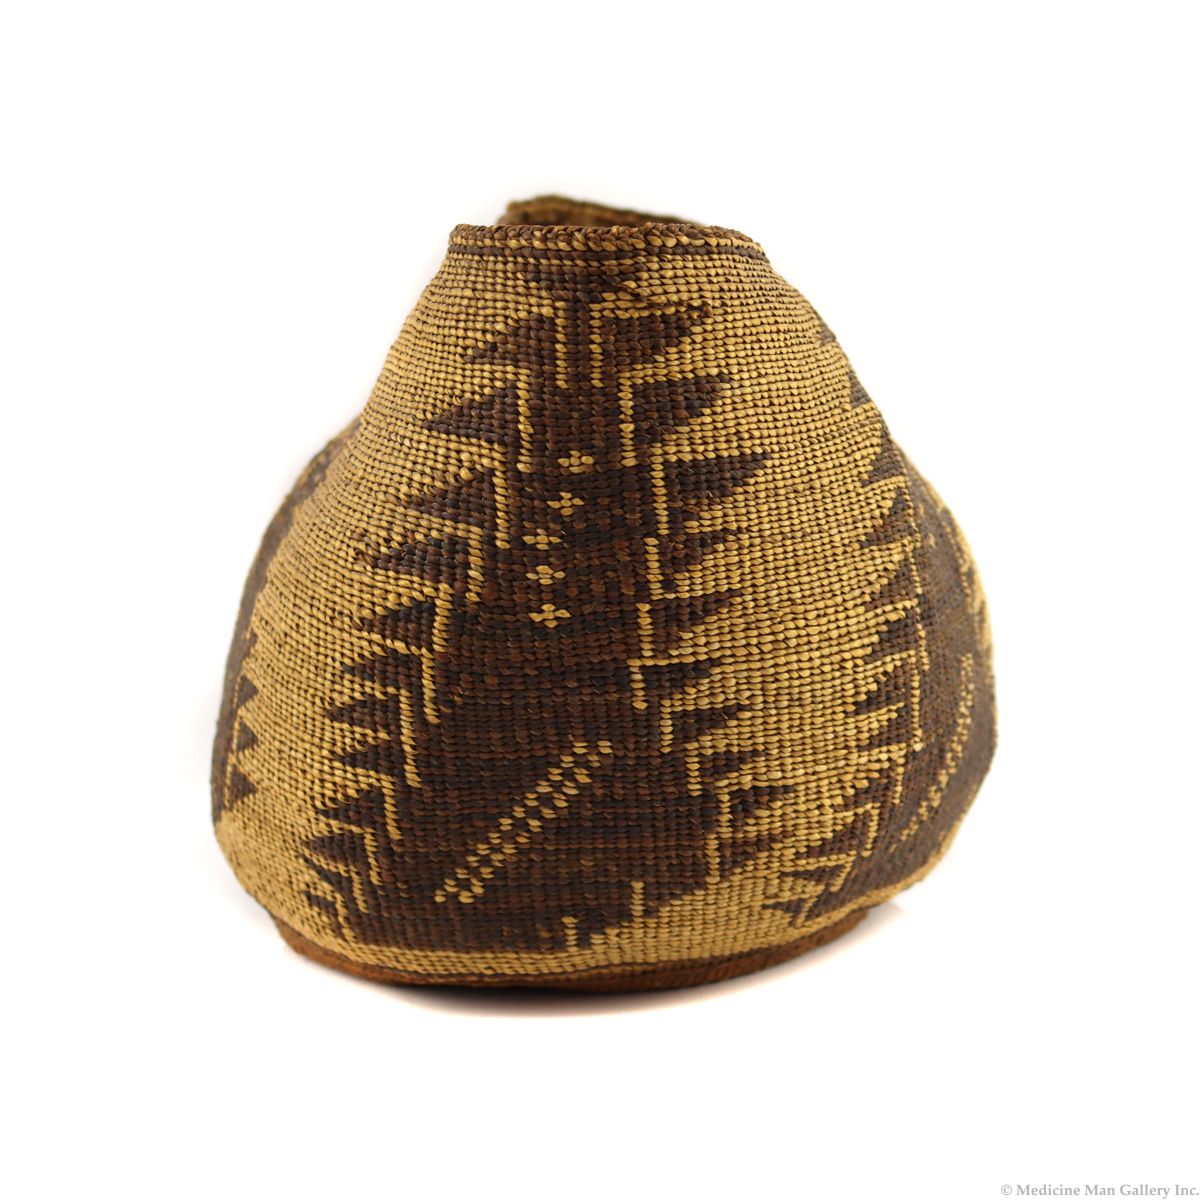 Klamath Polychrome Basket c. 1900-20s, 7.5" x 9.5" (SK90252C-0723-001)